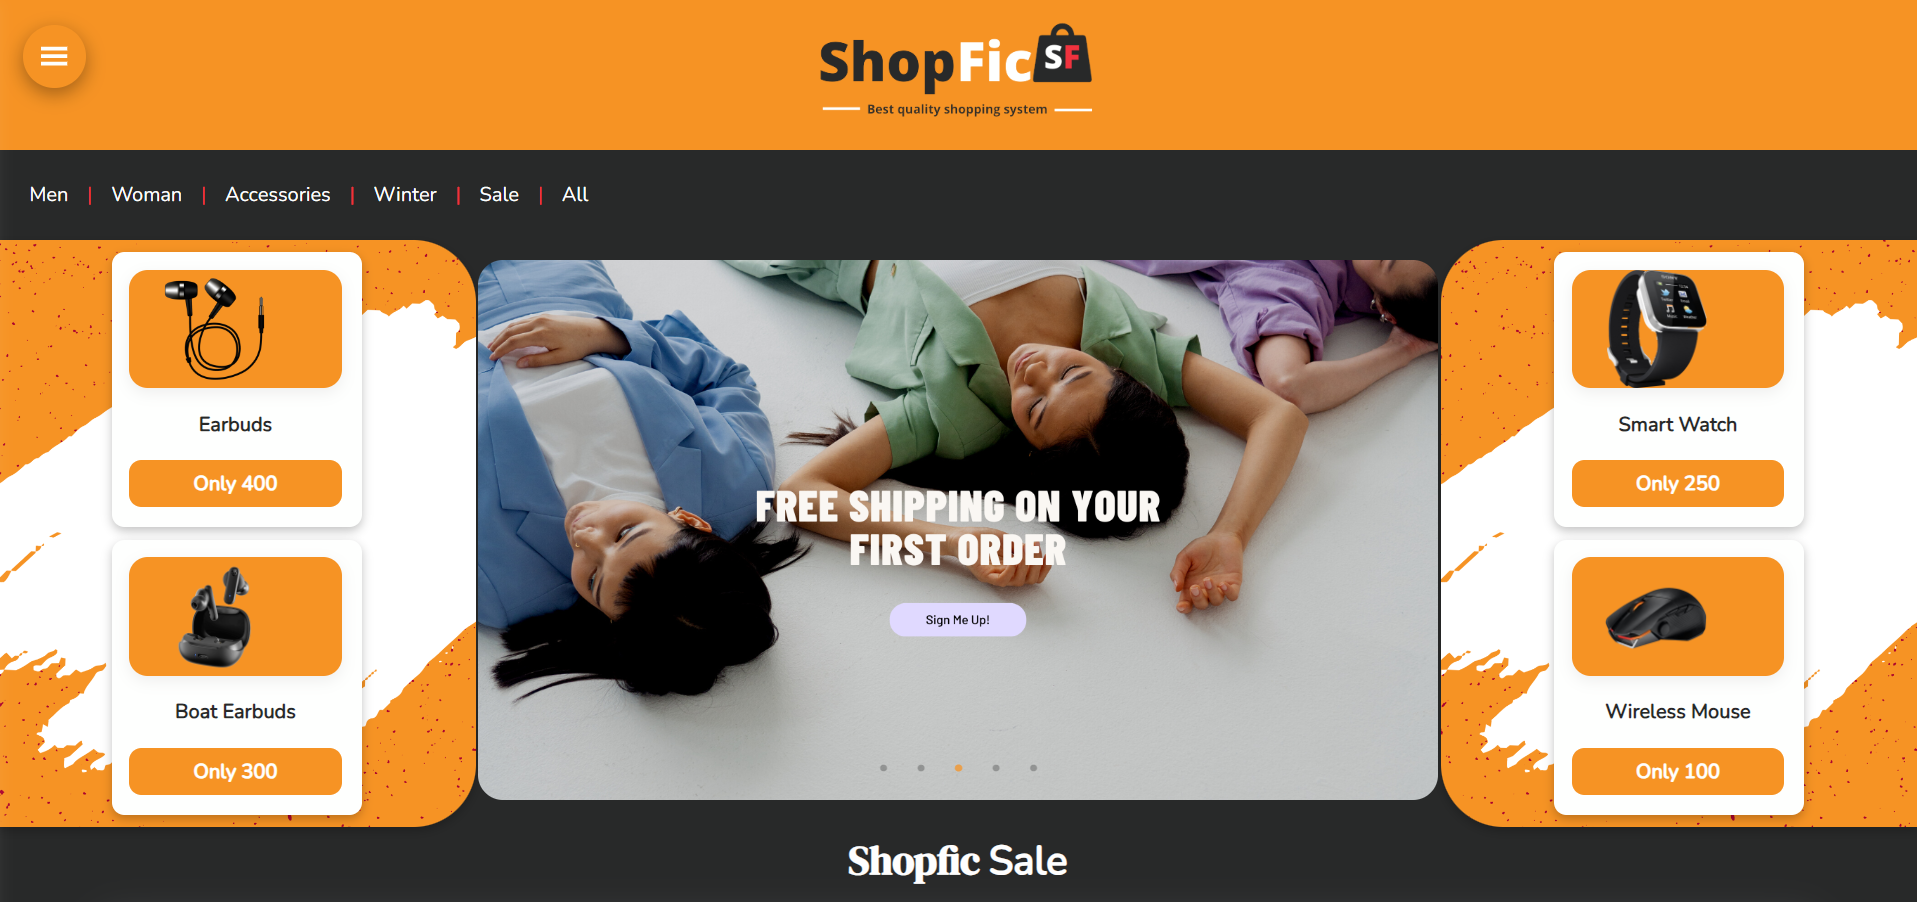 Shopfic Portfolio Project